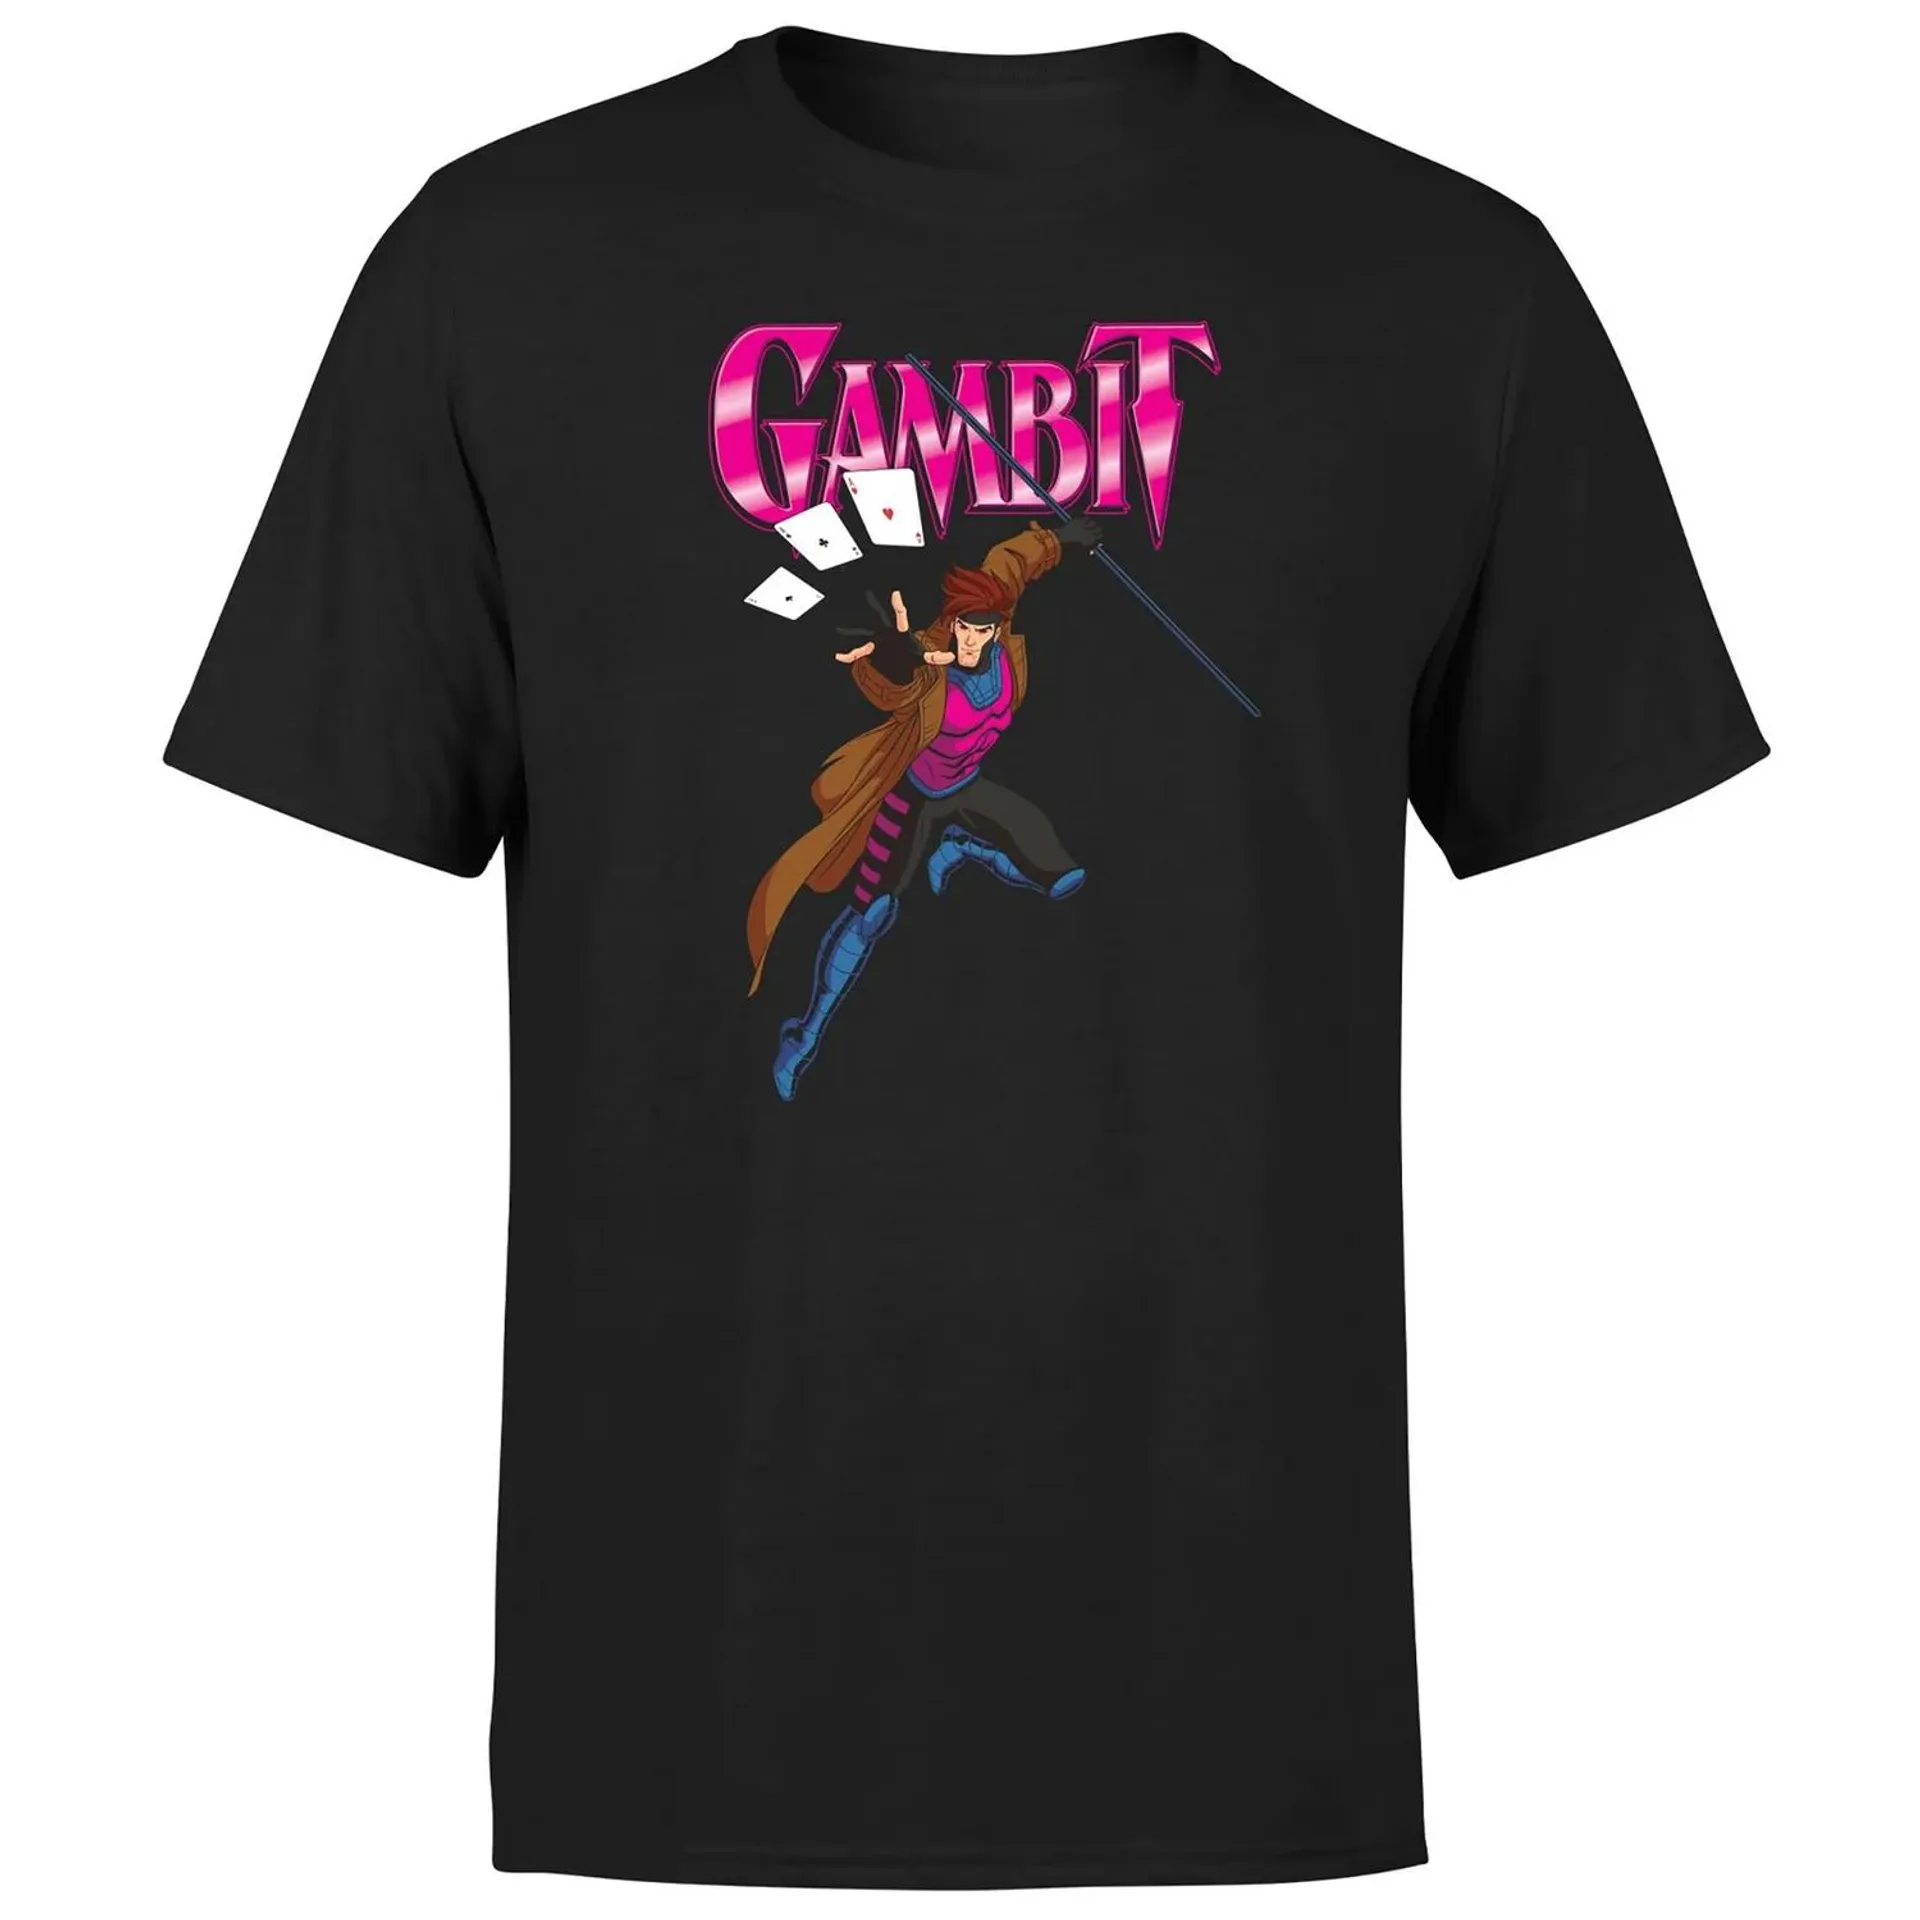 X-Men '97 Gambit Unisex T-Shirt - Black